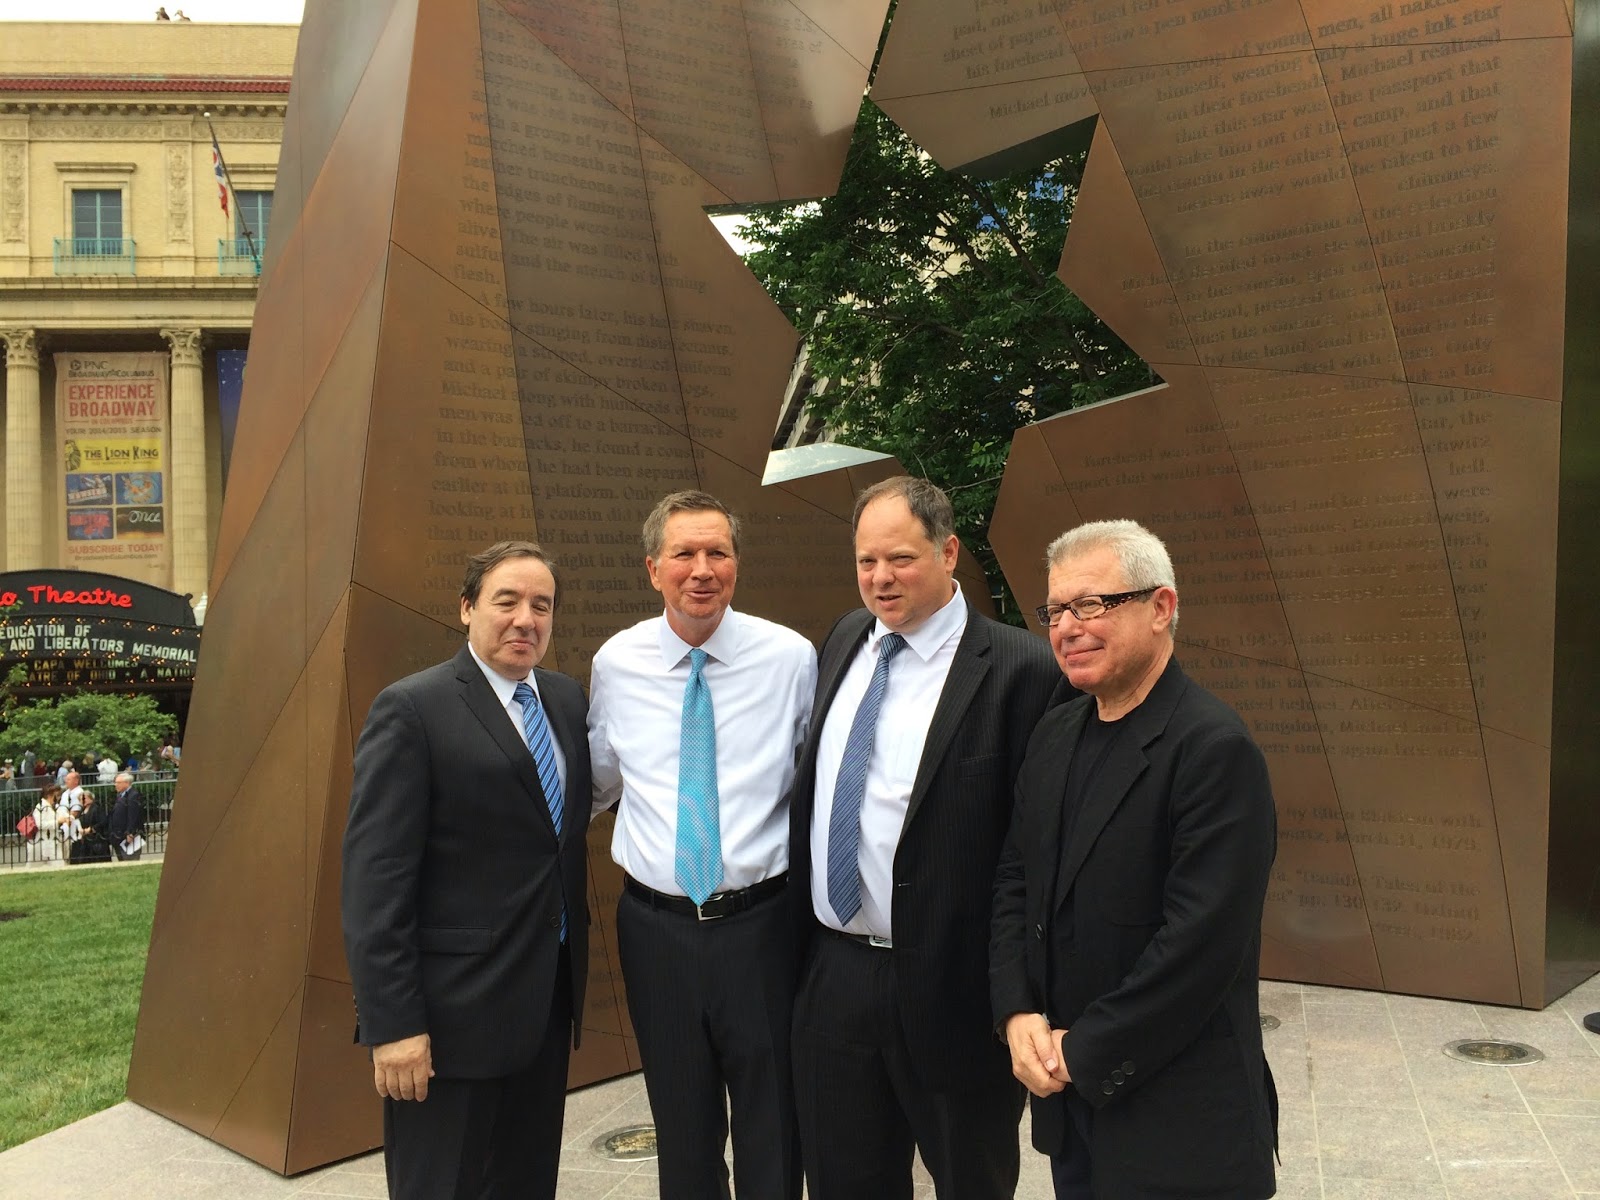 Ohio Dedicates New Holocaust and Liberators Memorial